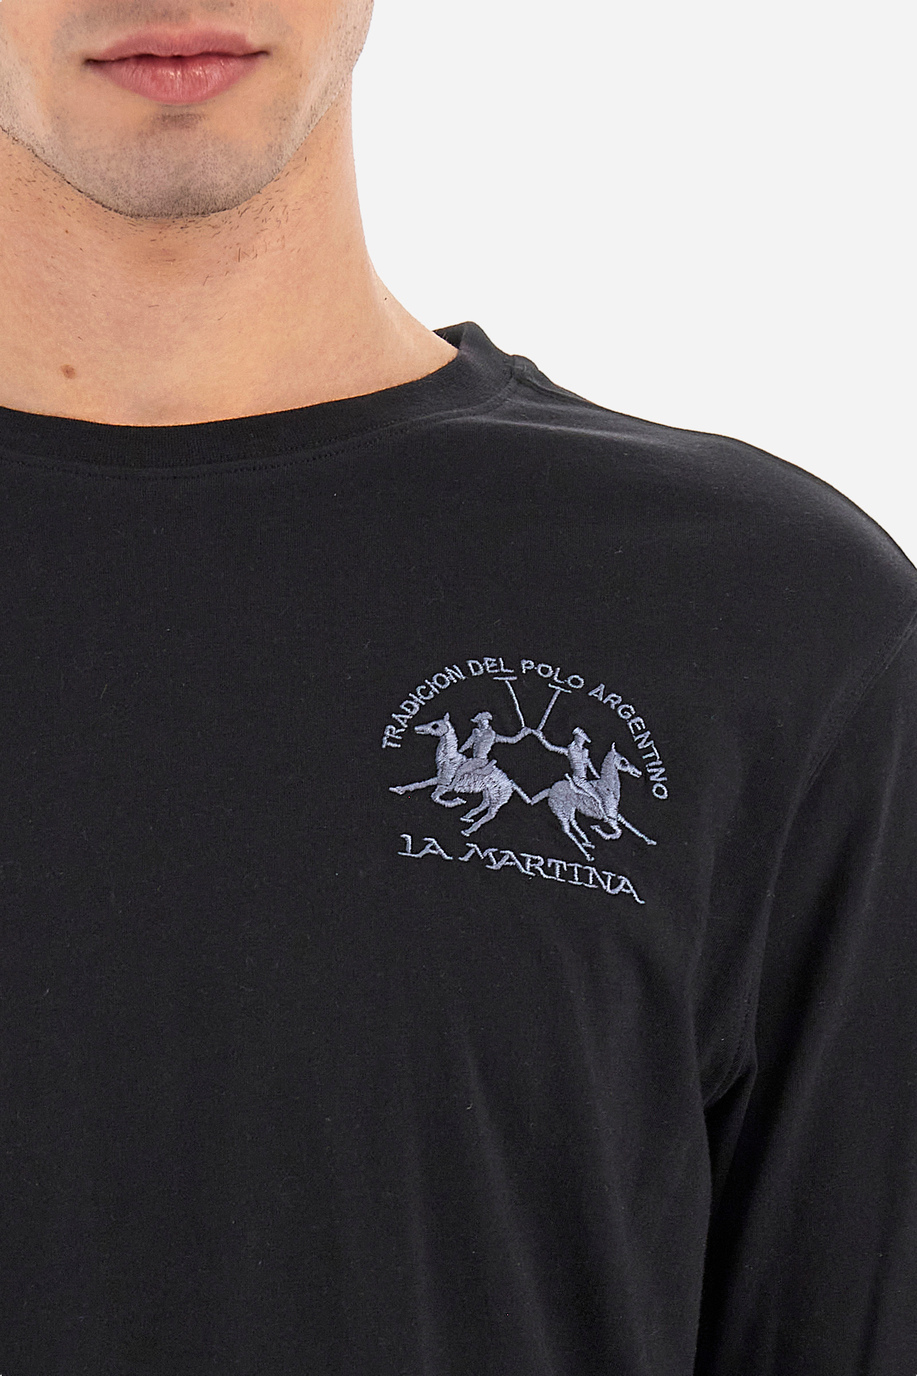 Herren -T -Shirt regular fit - Willey - T-Shirts | La Martina - Official Online Shop